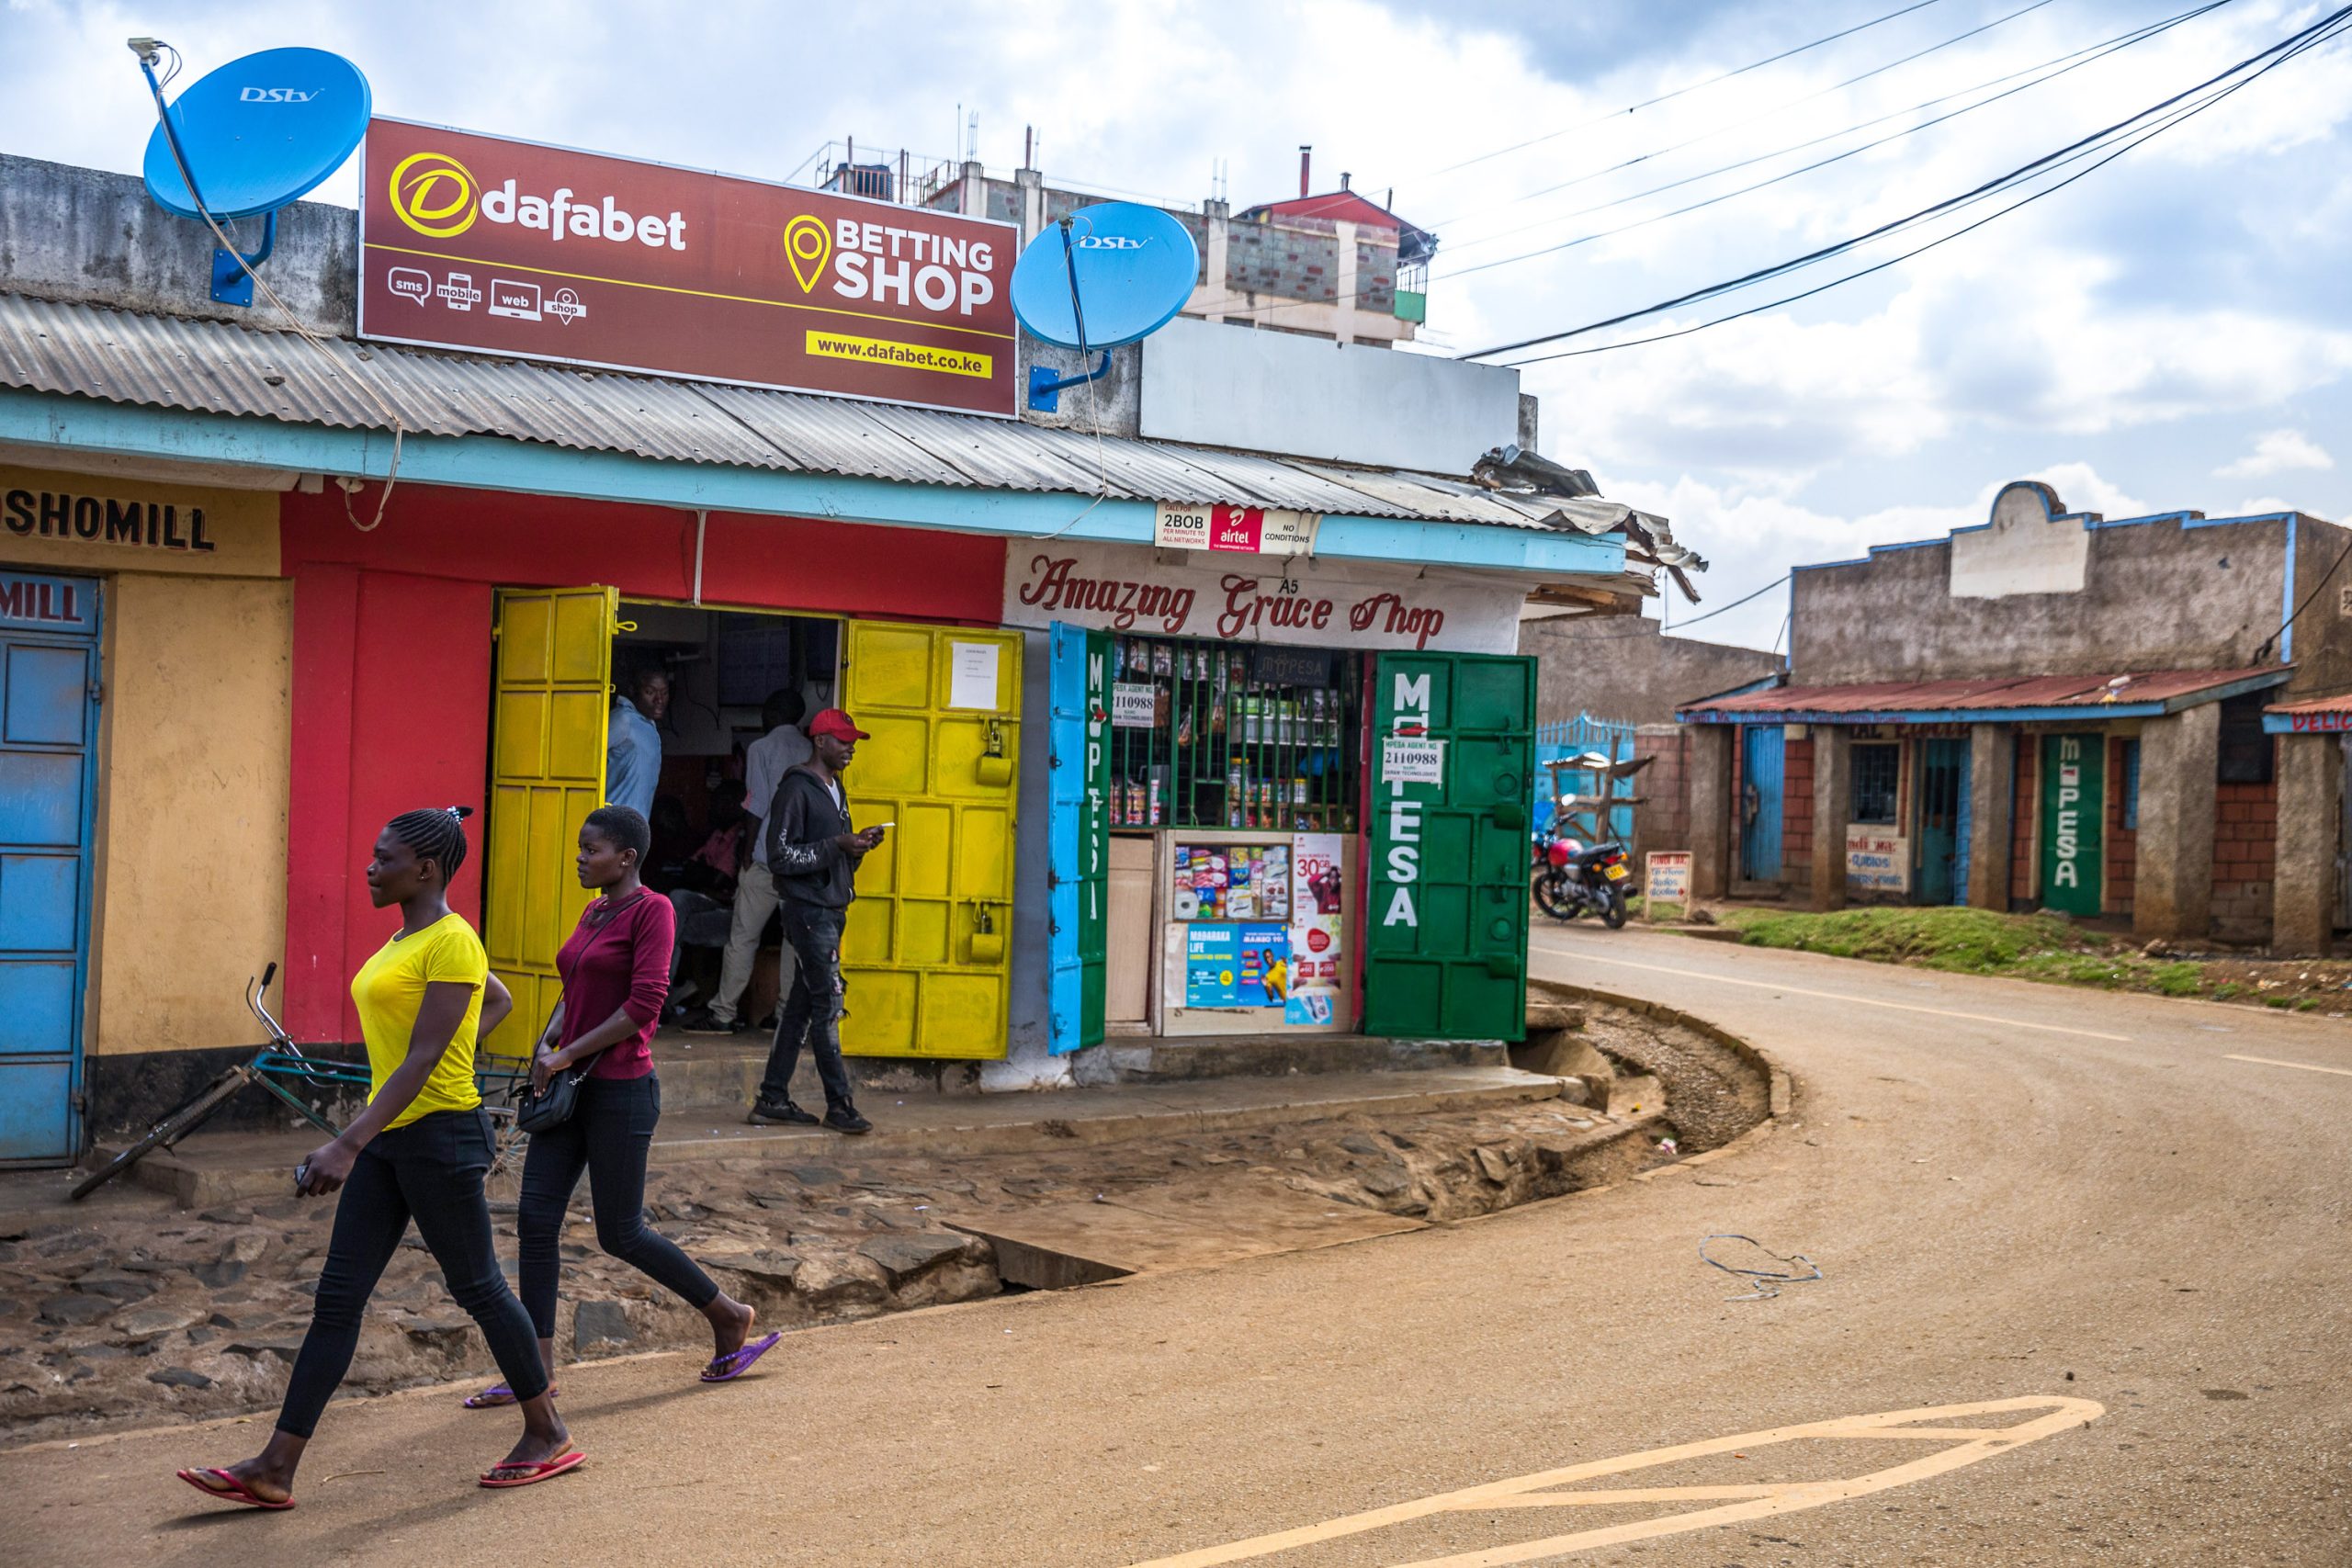 A shop advertising a betting company in Eldoret, Kenya